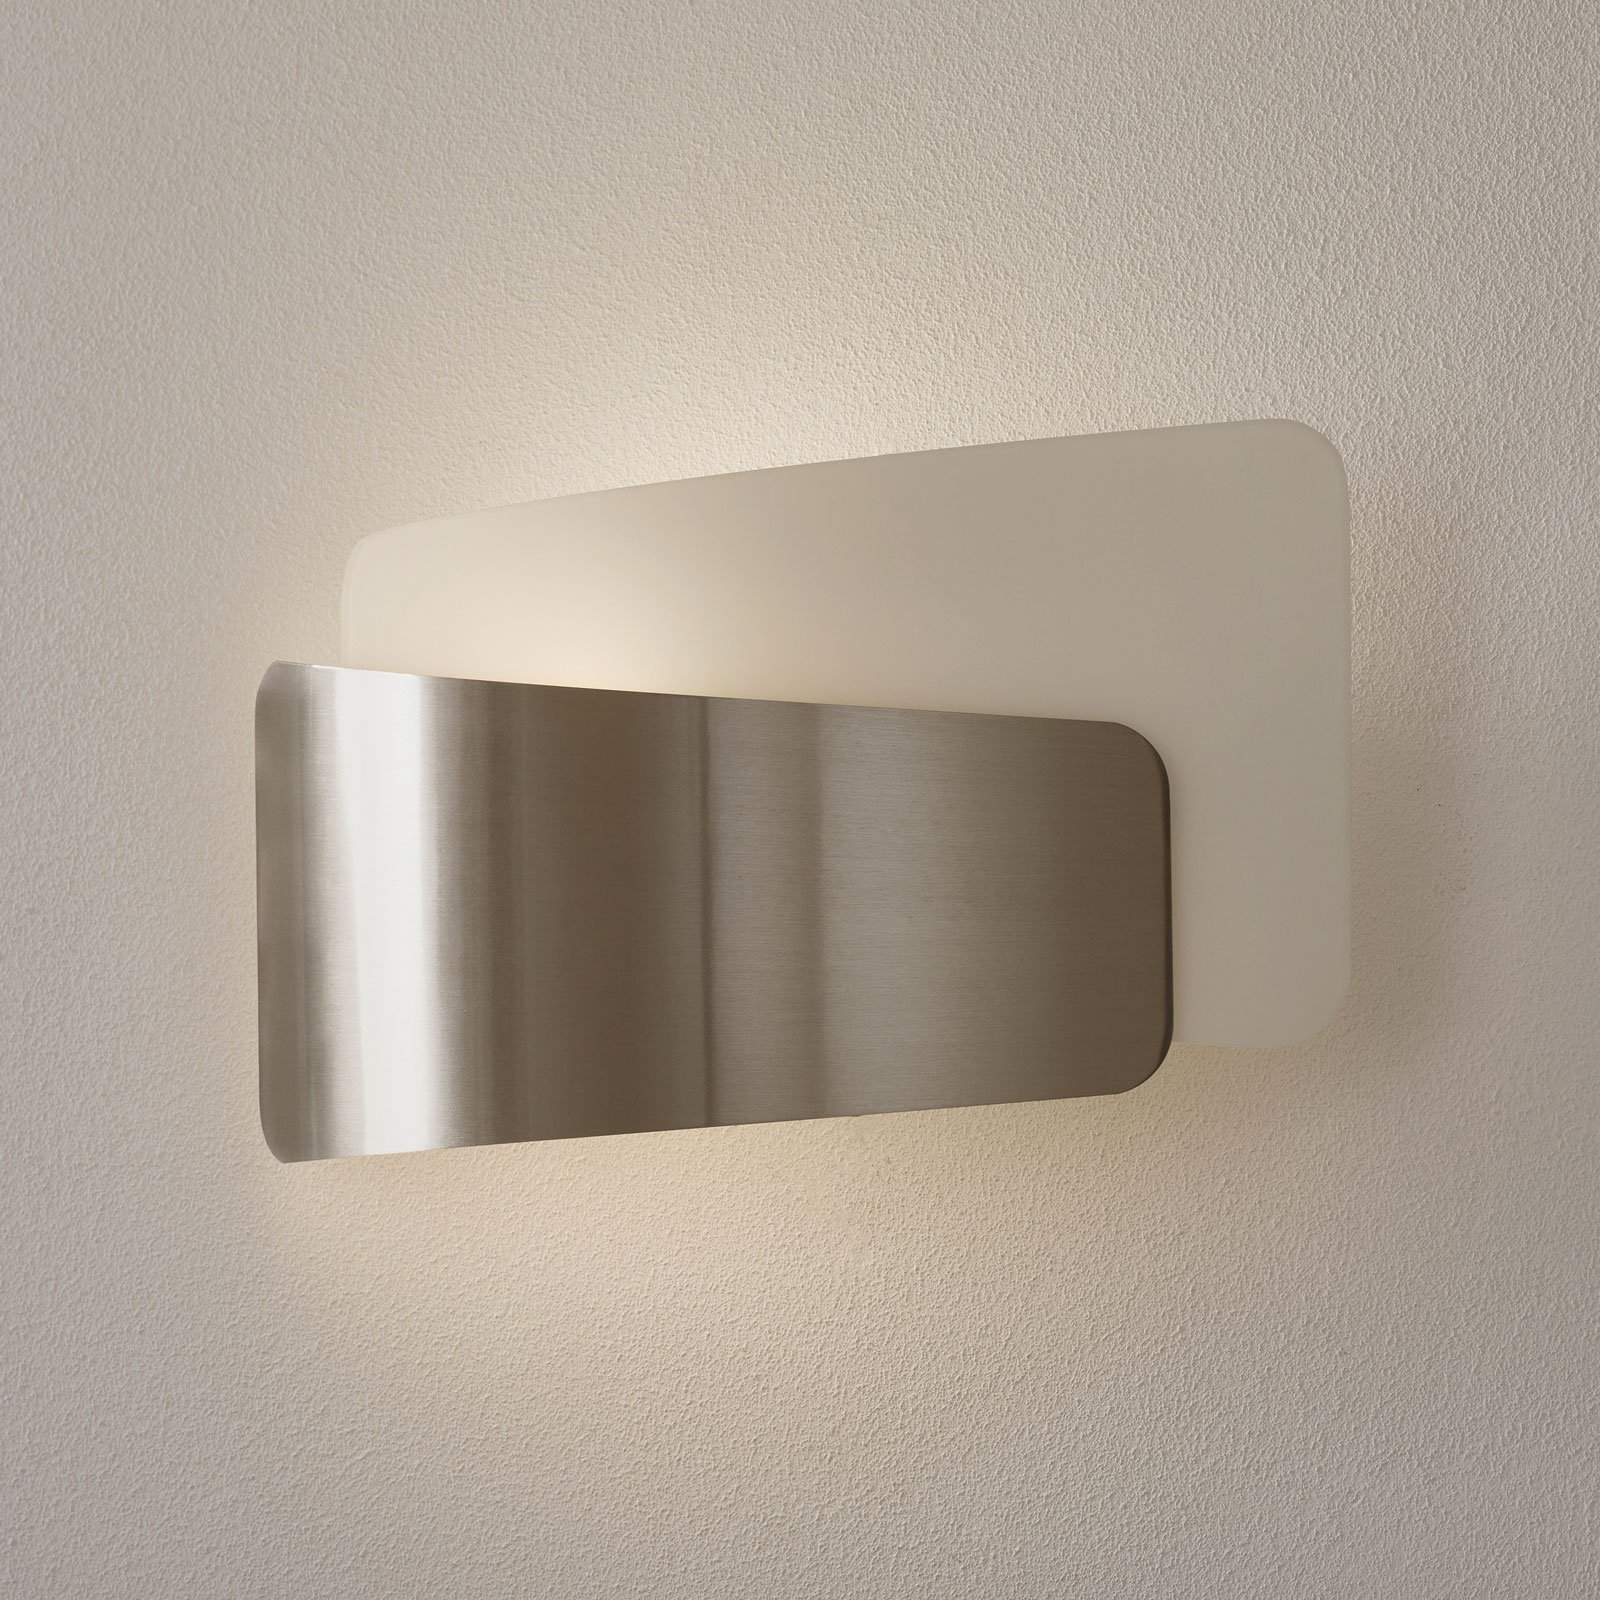 Asymmetrical wall light Slane